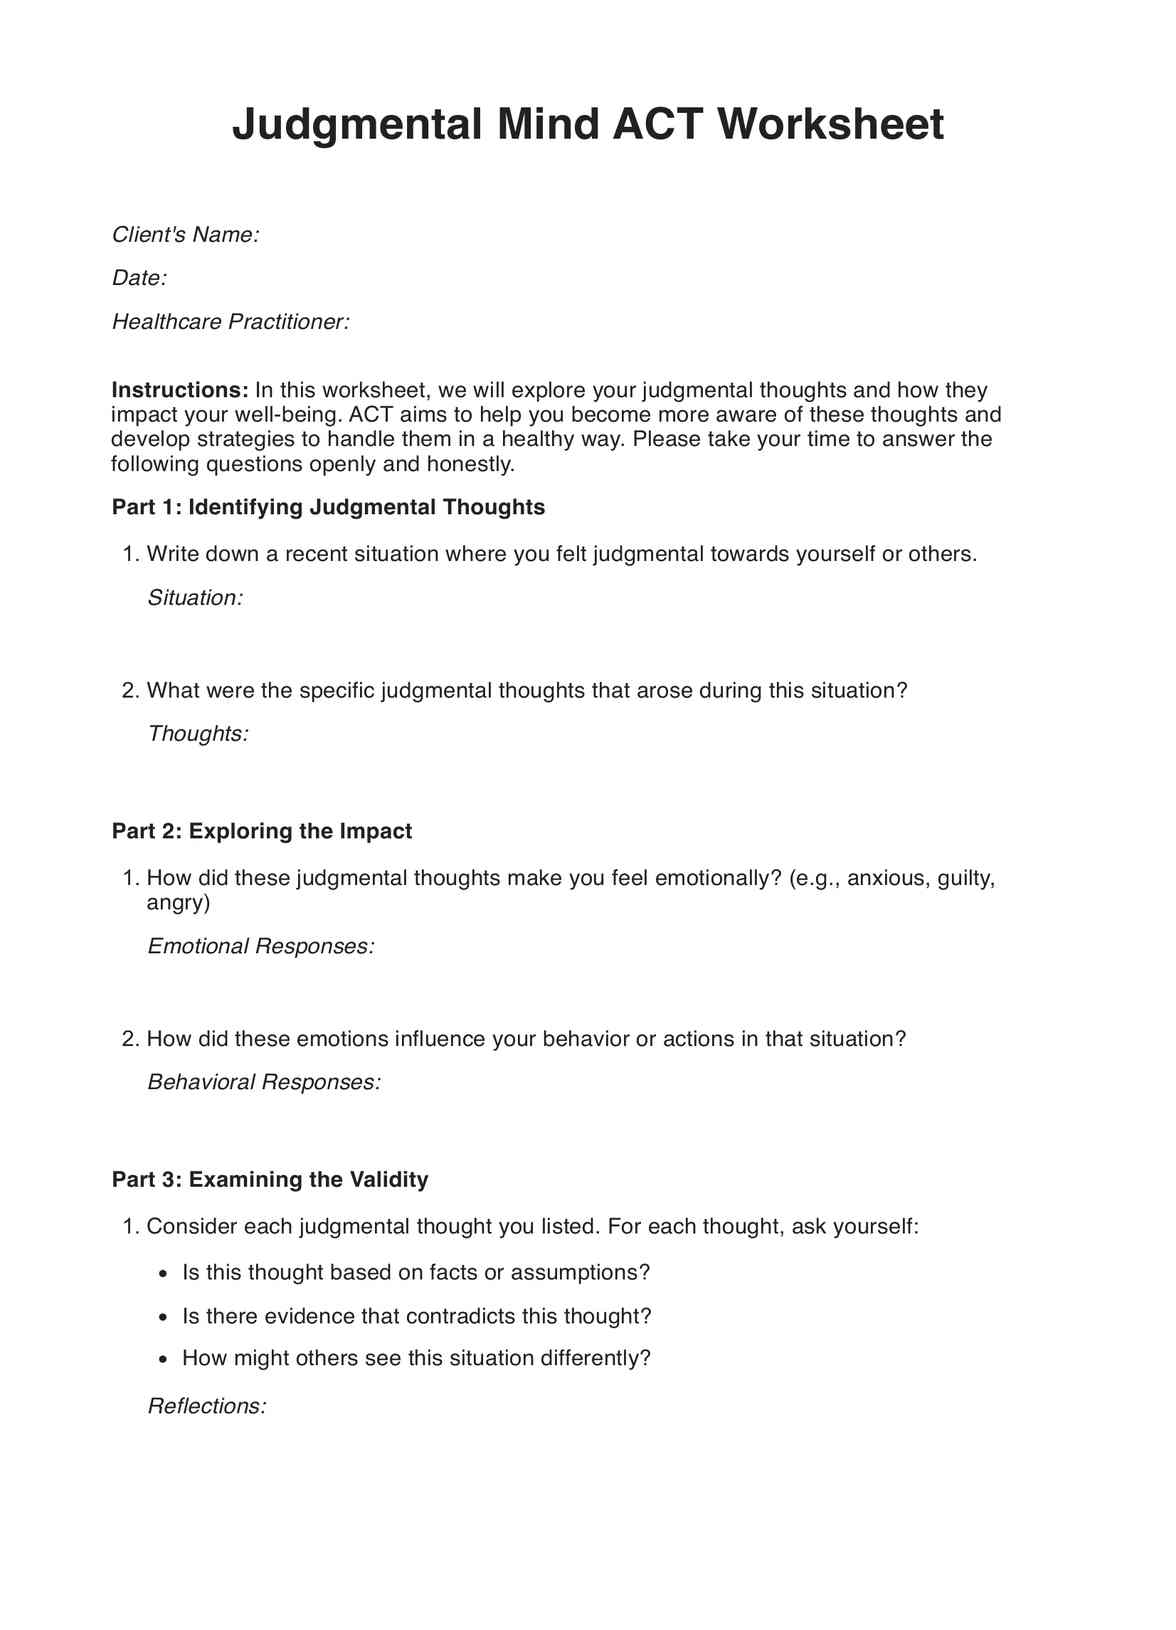 Judgmental Mind ACT Worksheet PDF Example